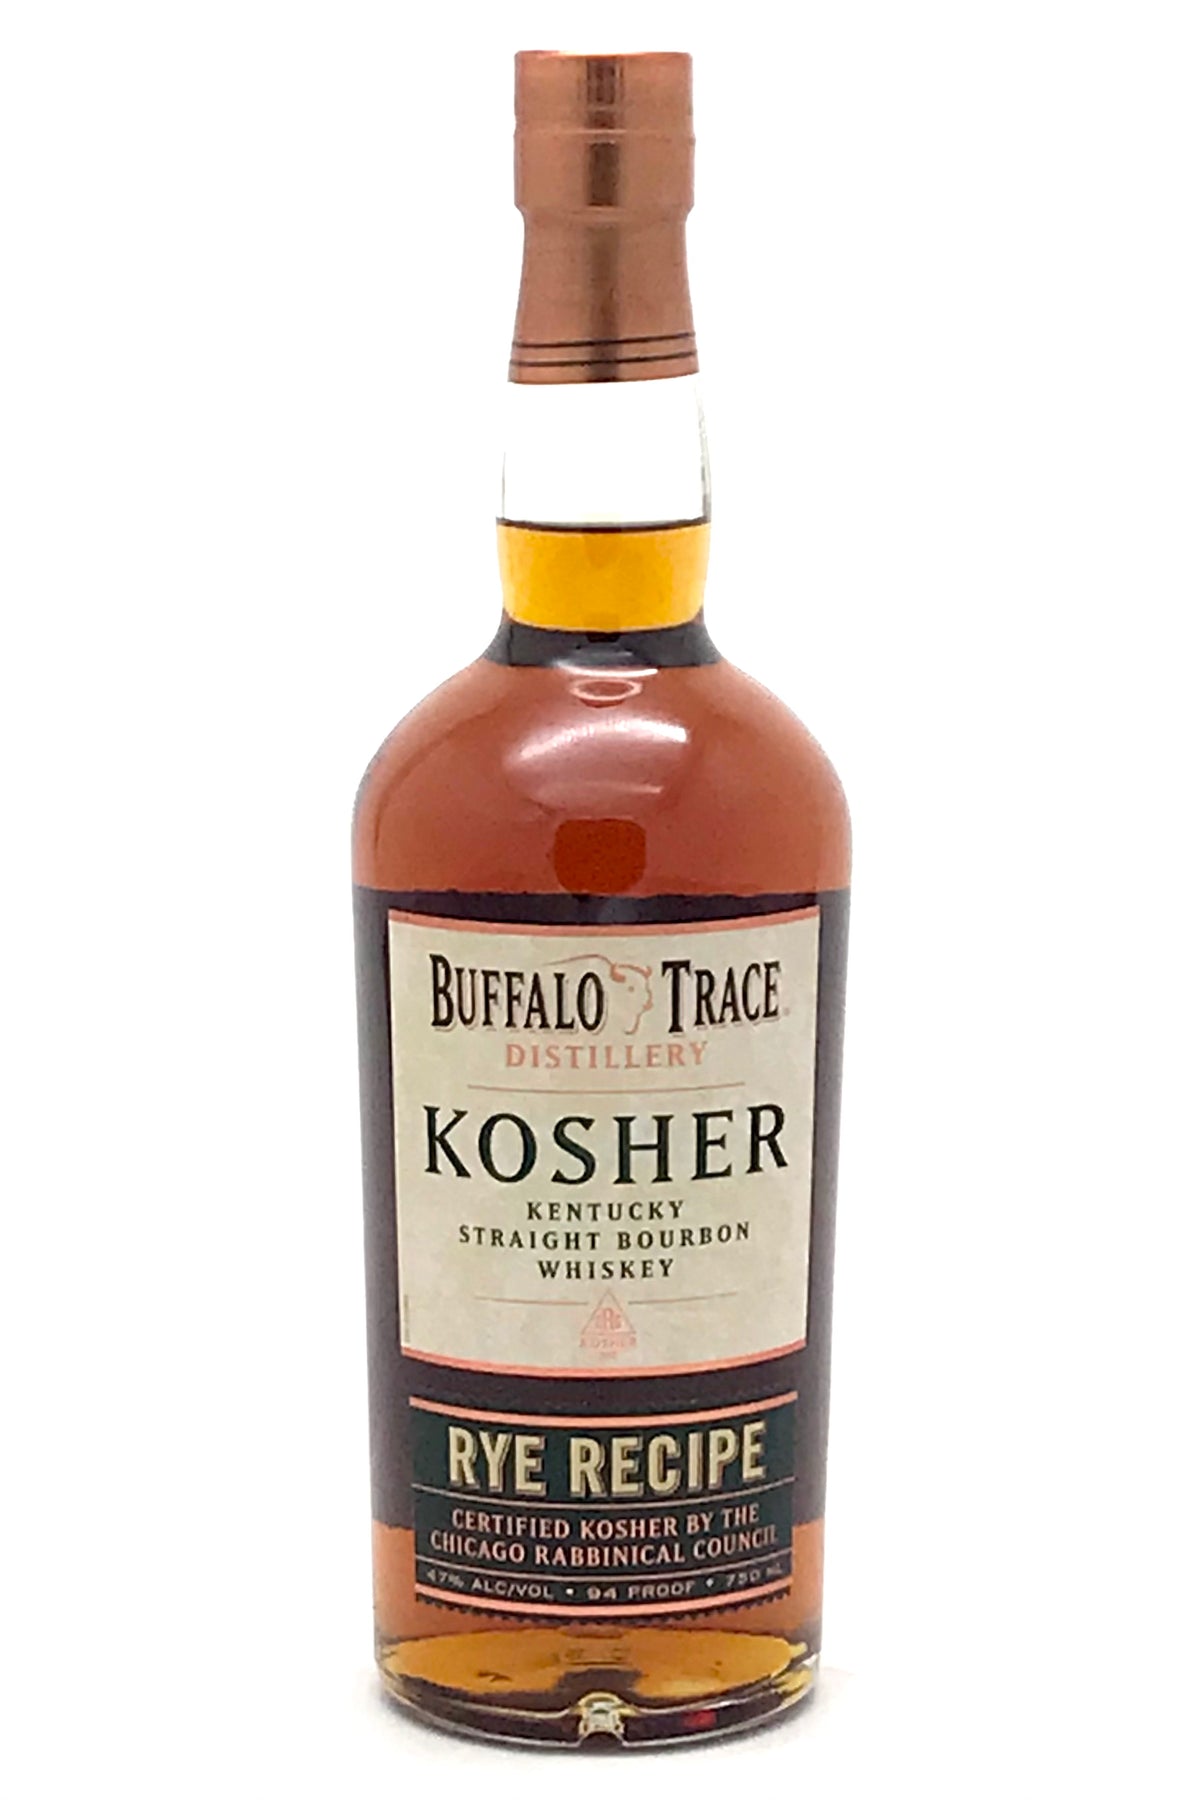 Buffalo Trace Kosher Rye Recipe Bourbon Whiskey